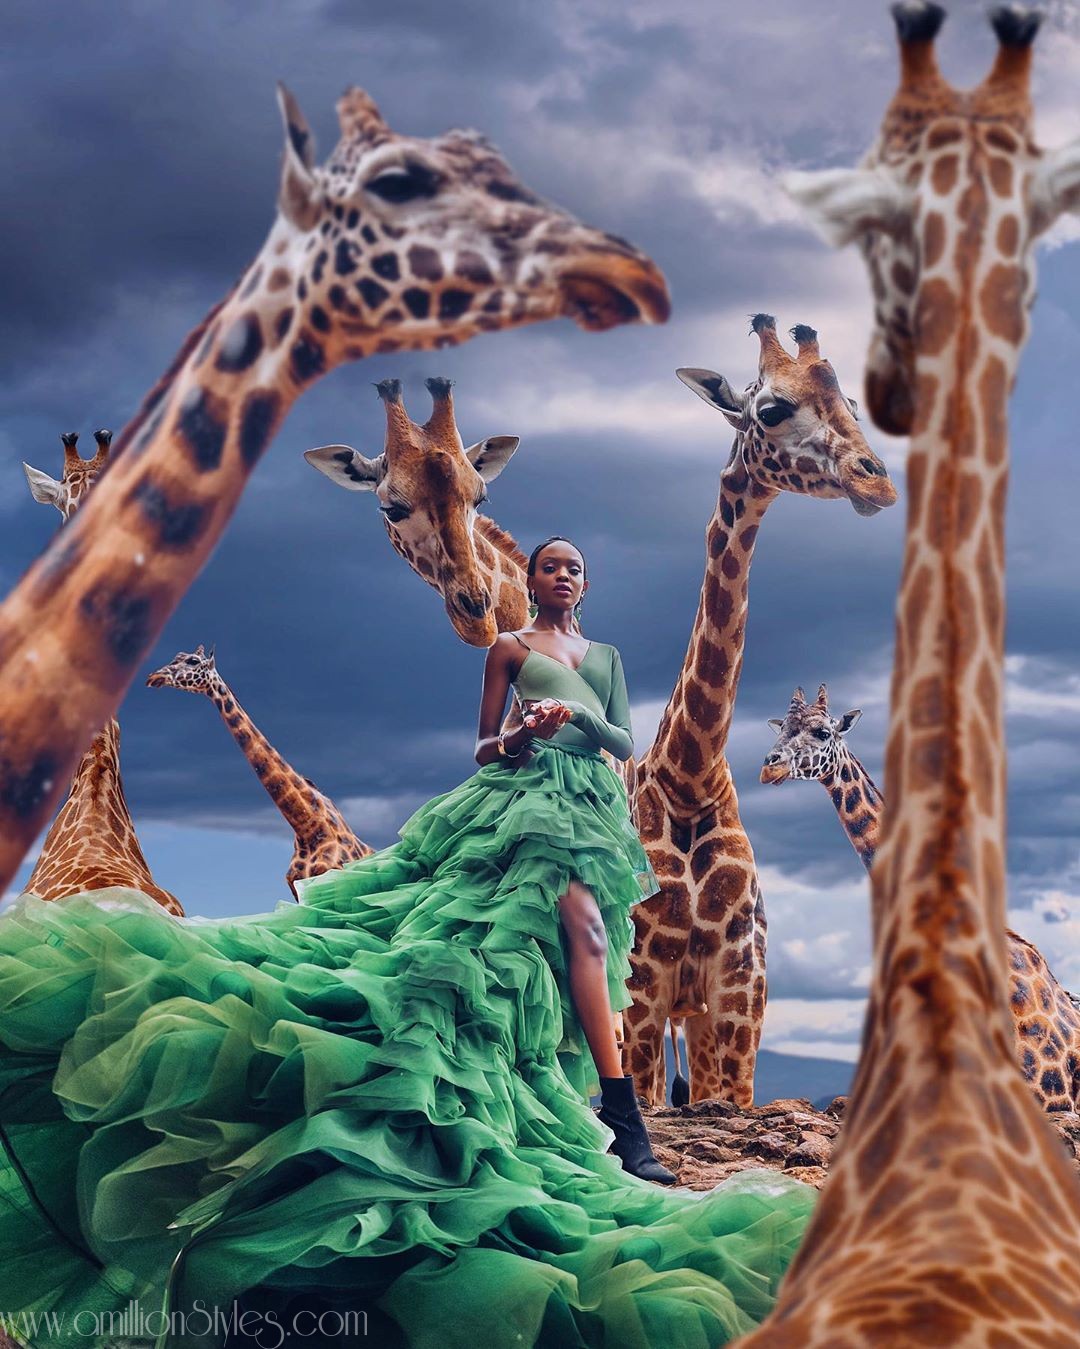 Miss Universe Kenya 2019 Looking Fabulous In This Wildlife Photoshoot